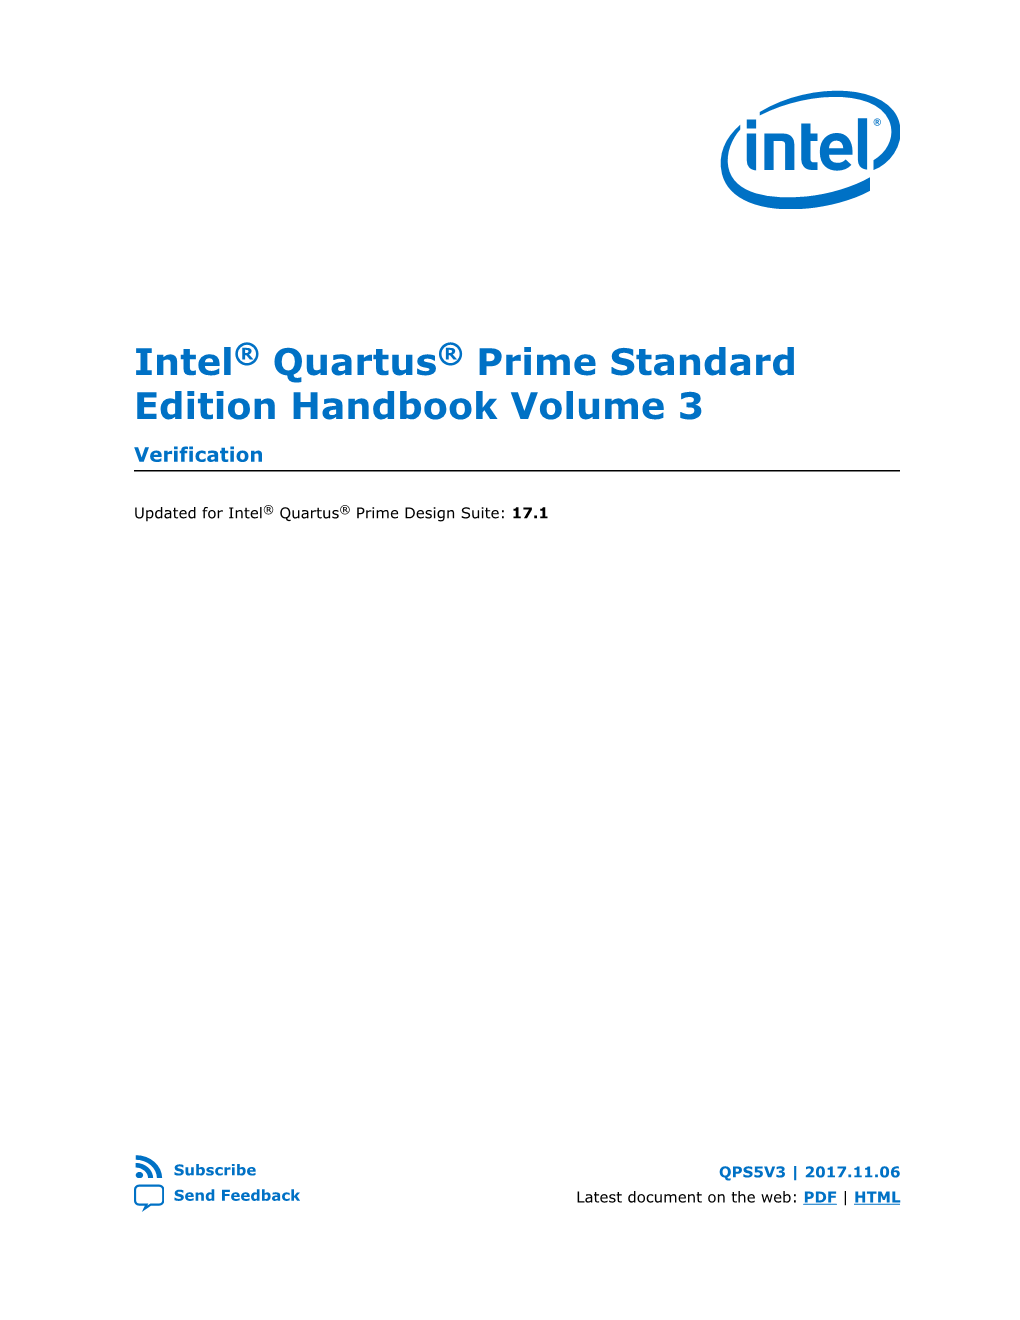 Intel® Quartus® Prime Standard Edition Handbook Volume 3 Verification